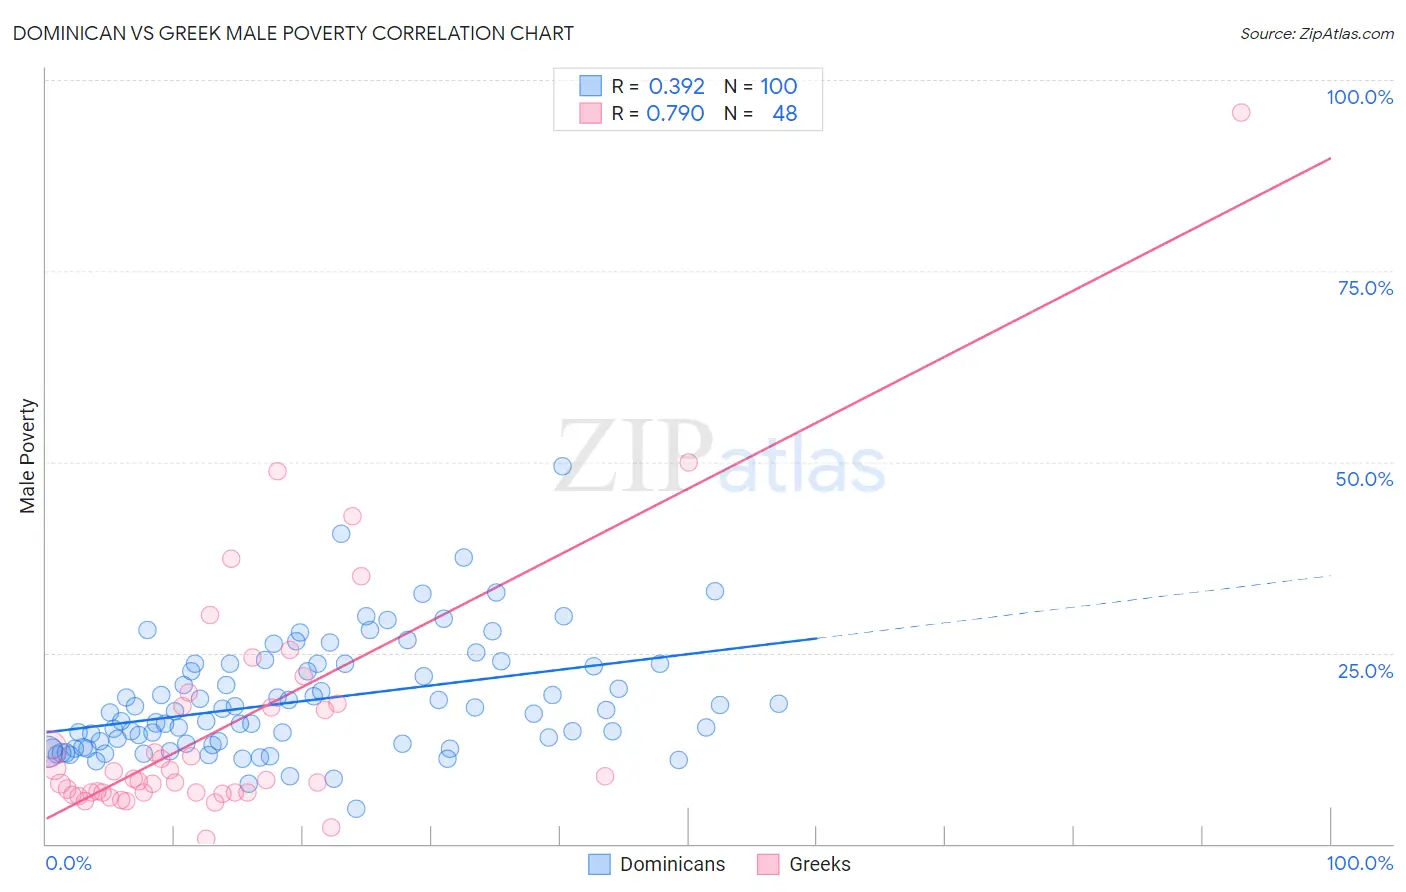 Dominican vs Greek Male Poverty